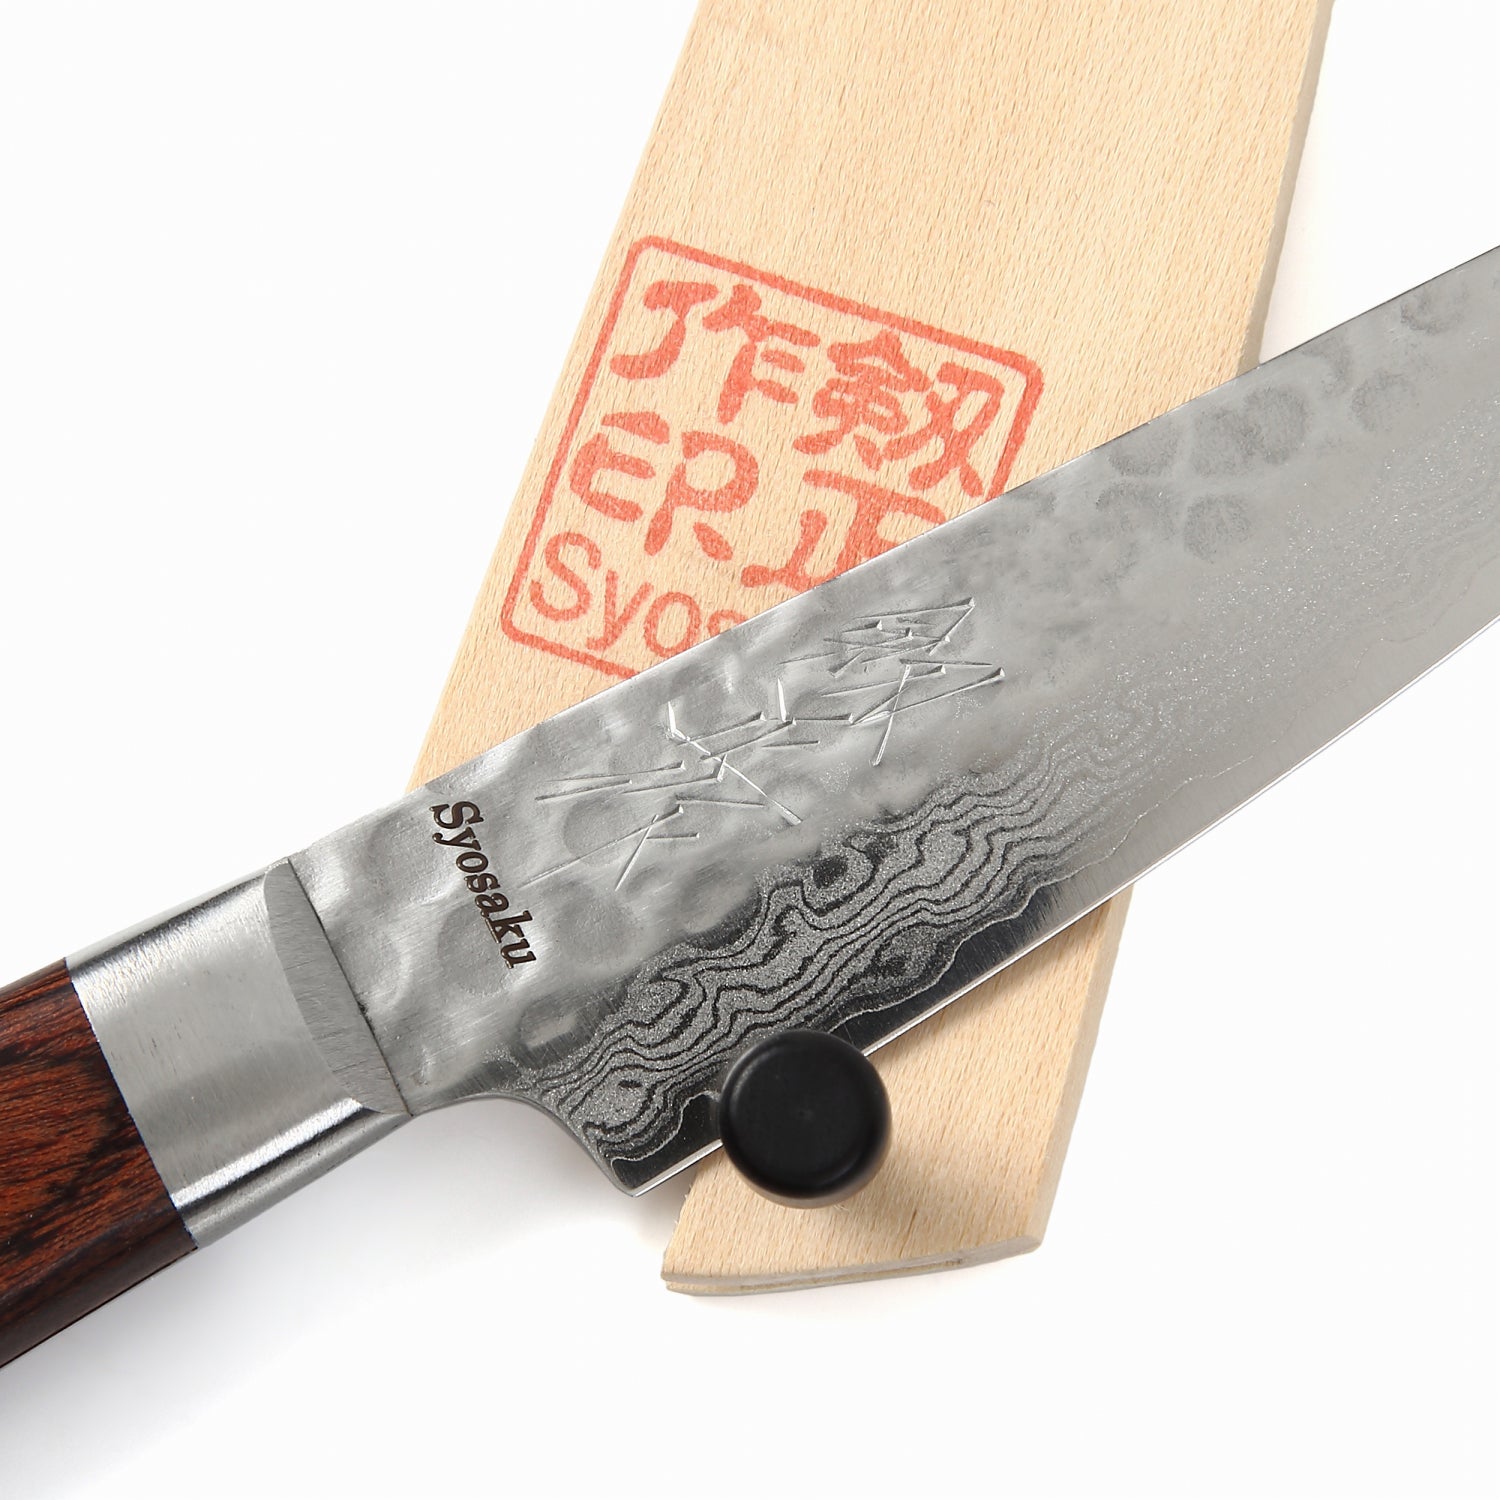 Syosaku Japanese Paring Knife Damascus VG-10 16 Layer Mahogany Handle, 3-inch (80mm) with Magnolia Wood Sheath Saya Cover